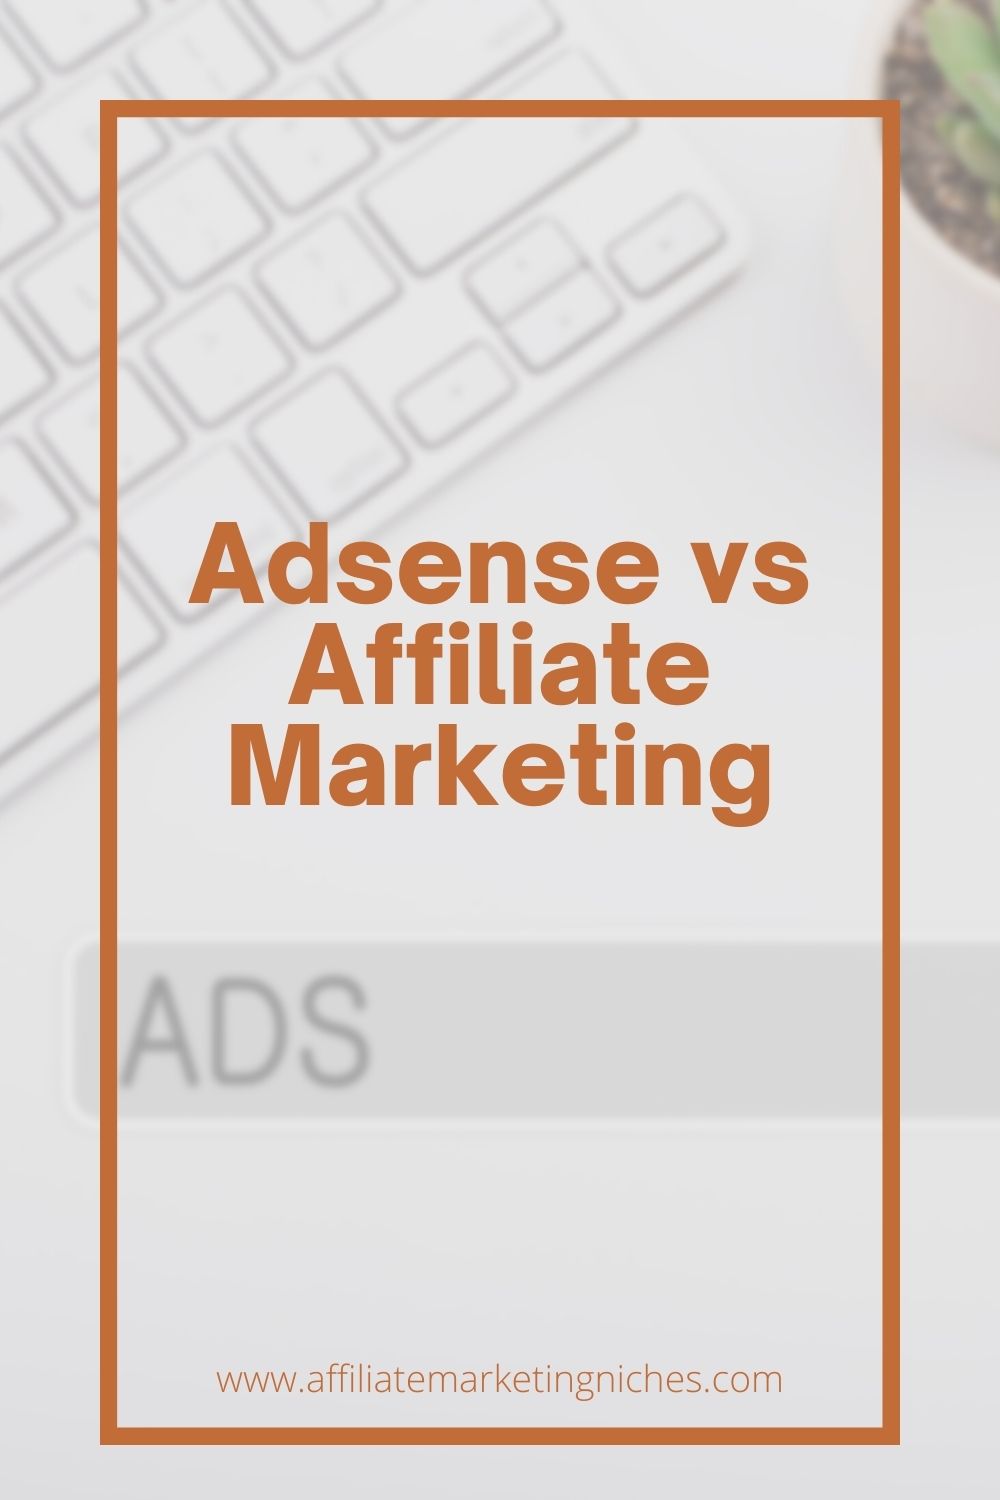 Adsense or Affiliate Marketing